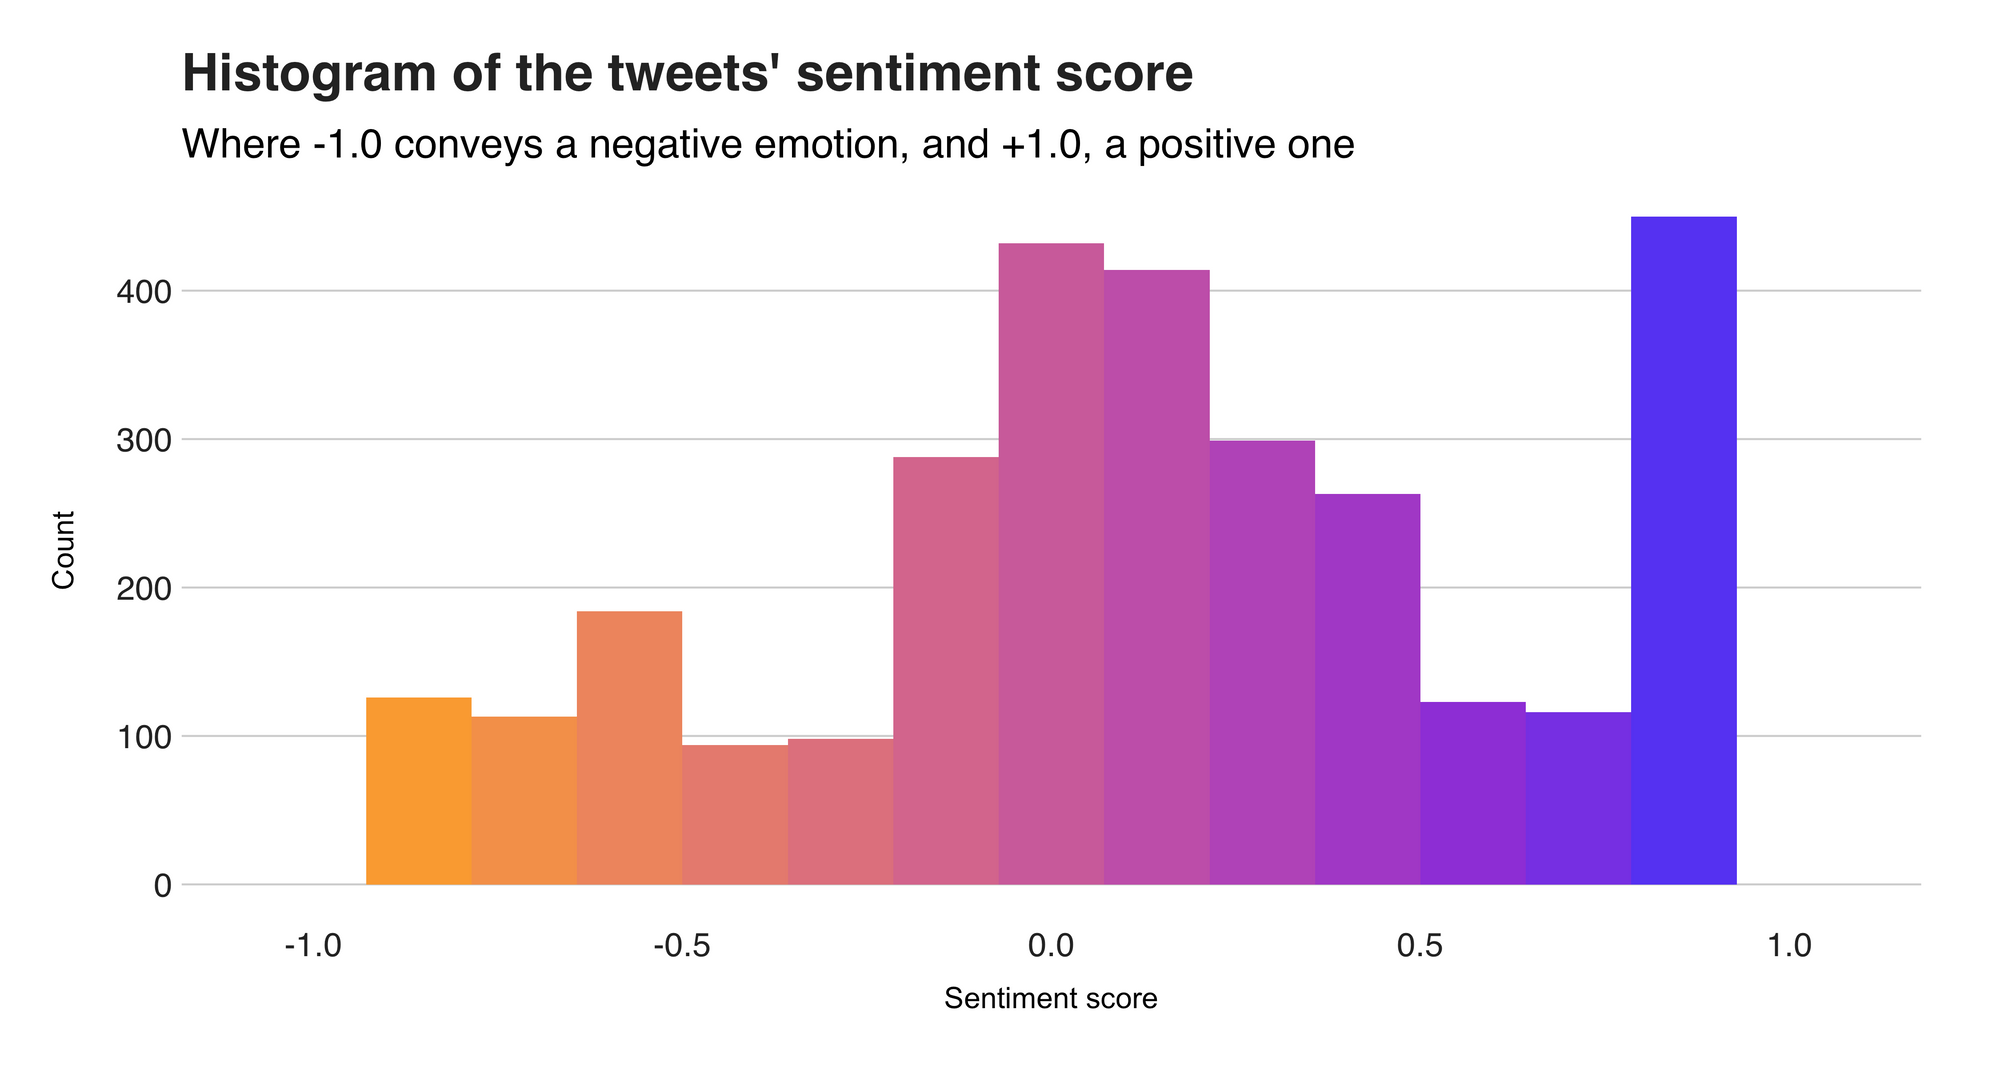 Figure 3: Histogram of the tweets' sentiment score.